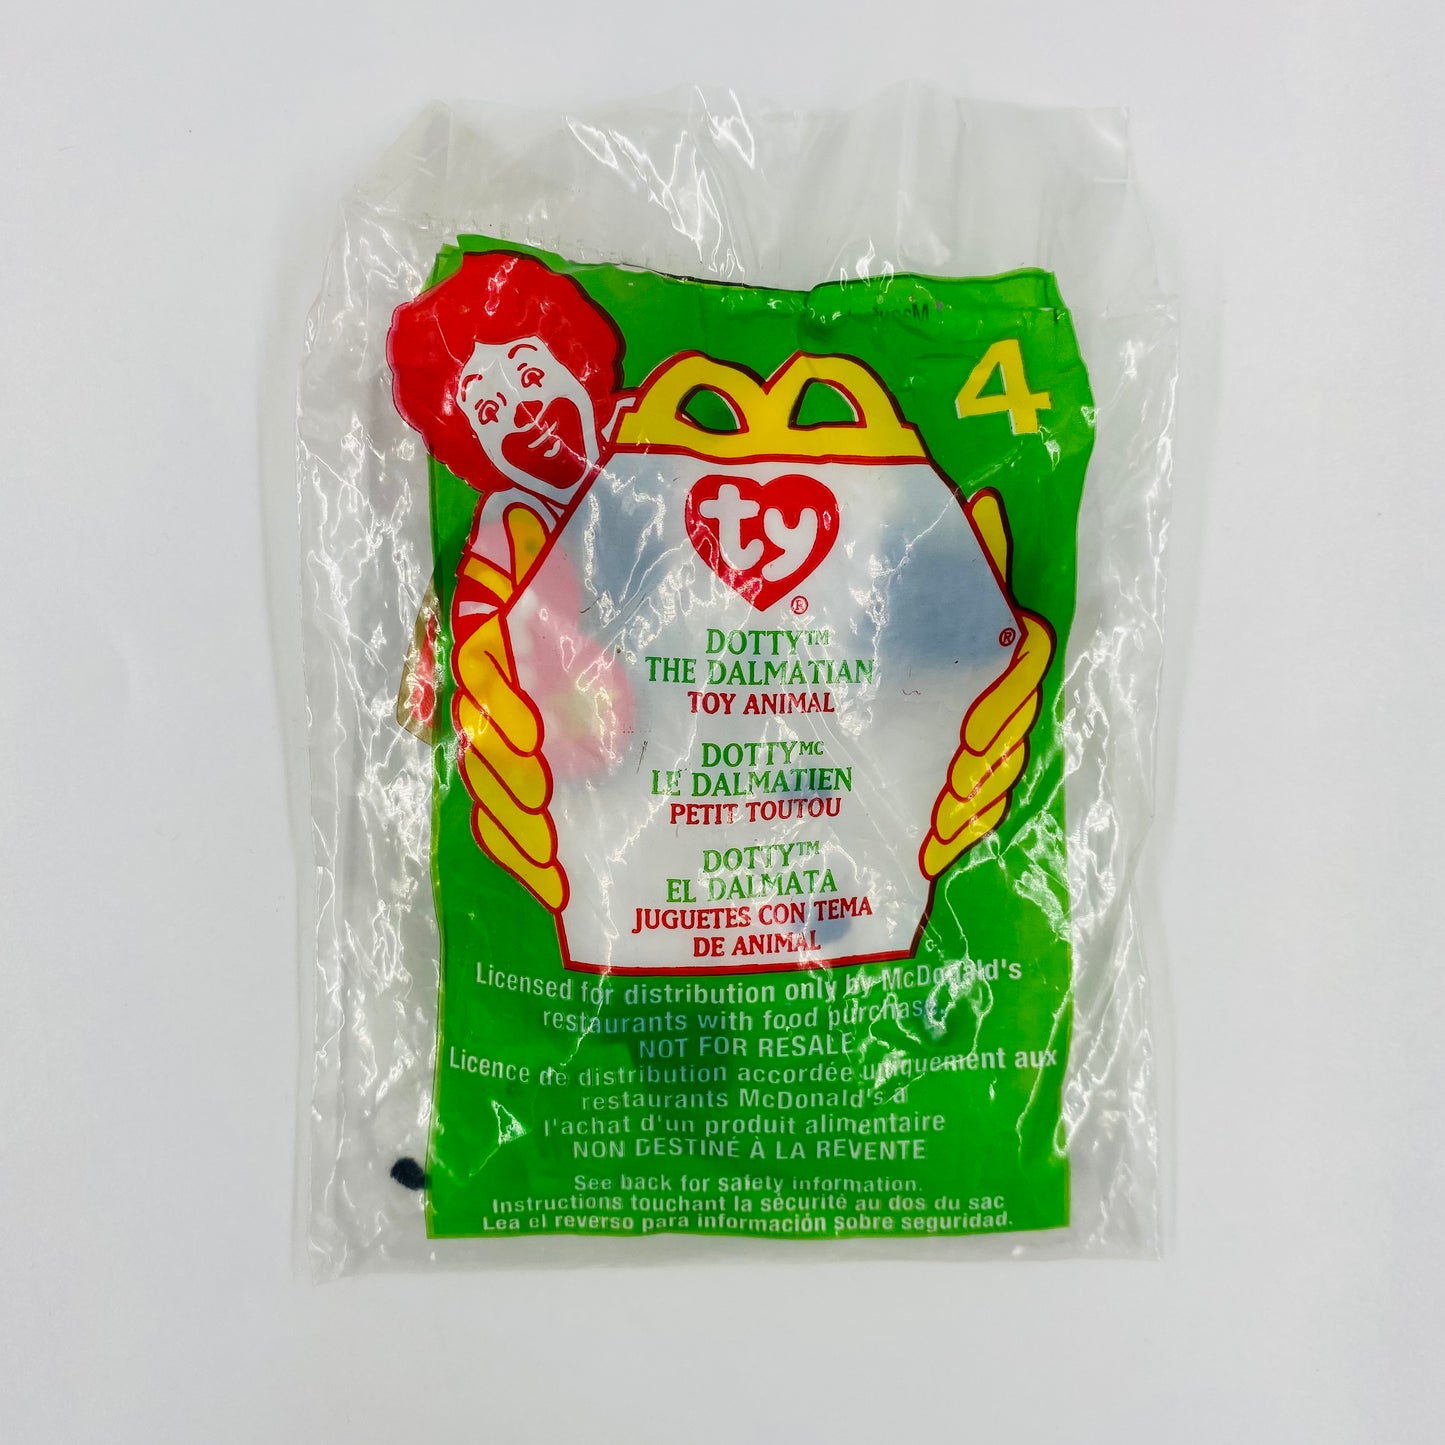 Teenie Beanie Babies Dotty the Dalmatian McDonald's Happy Meal bean bag plush toy animal (2000) bagged